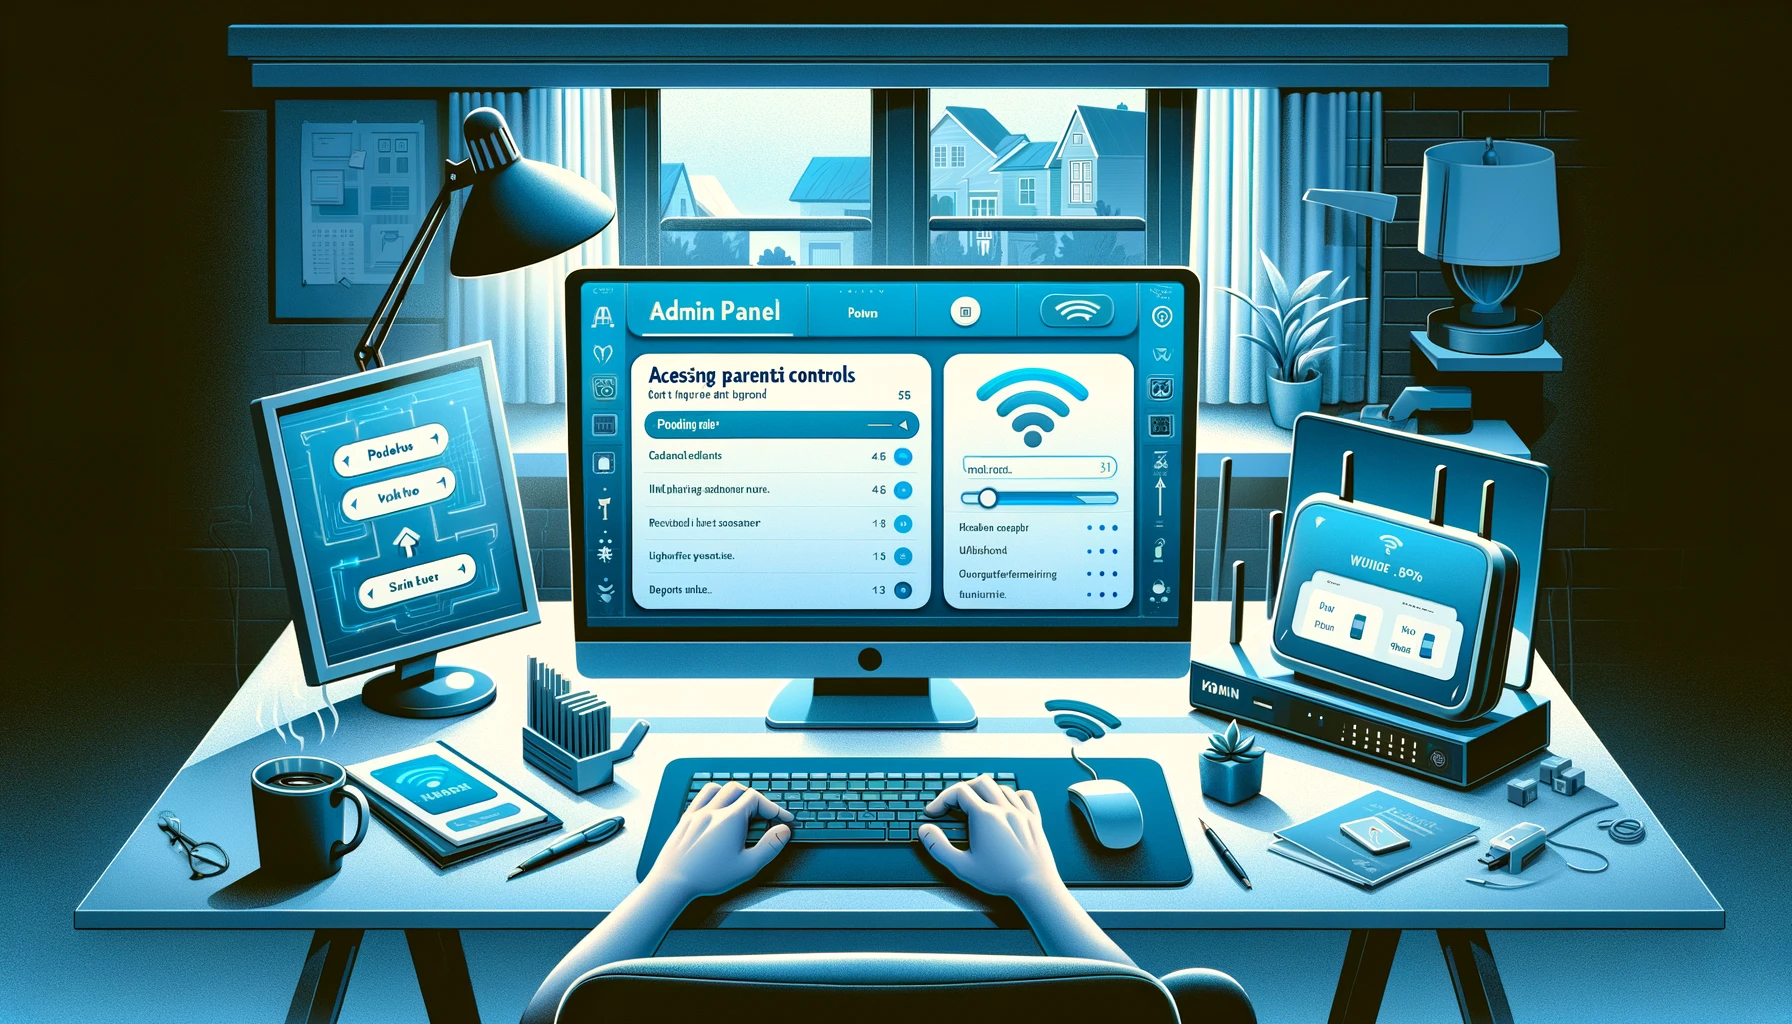 Wifi Admin panel Image